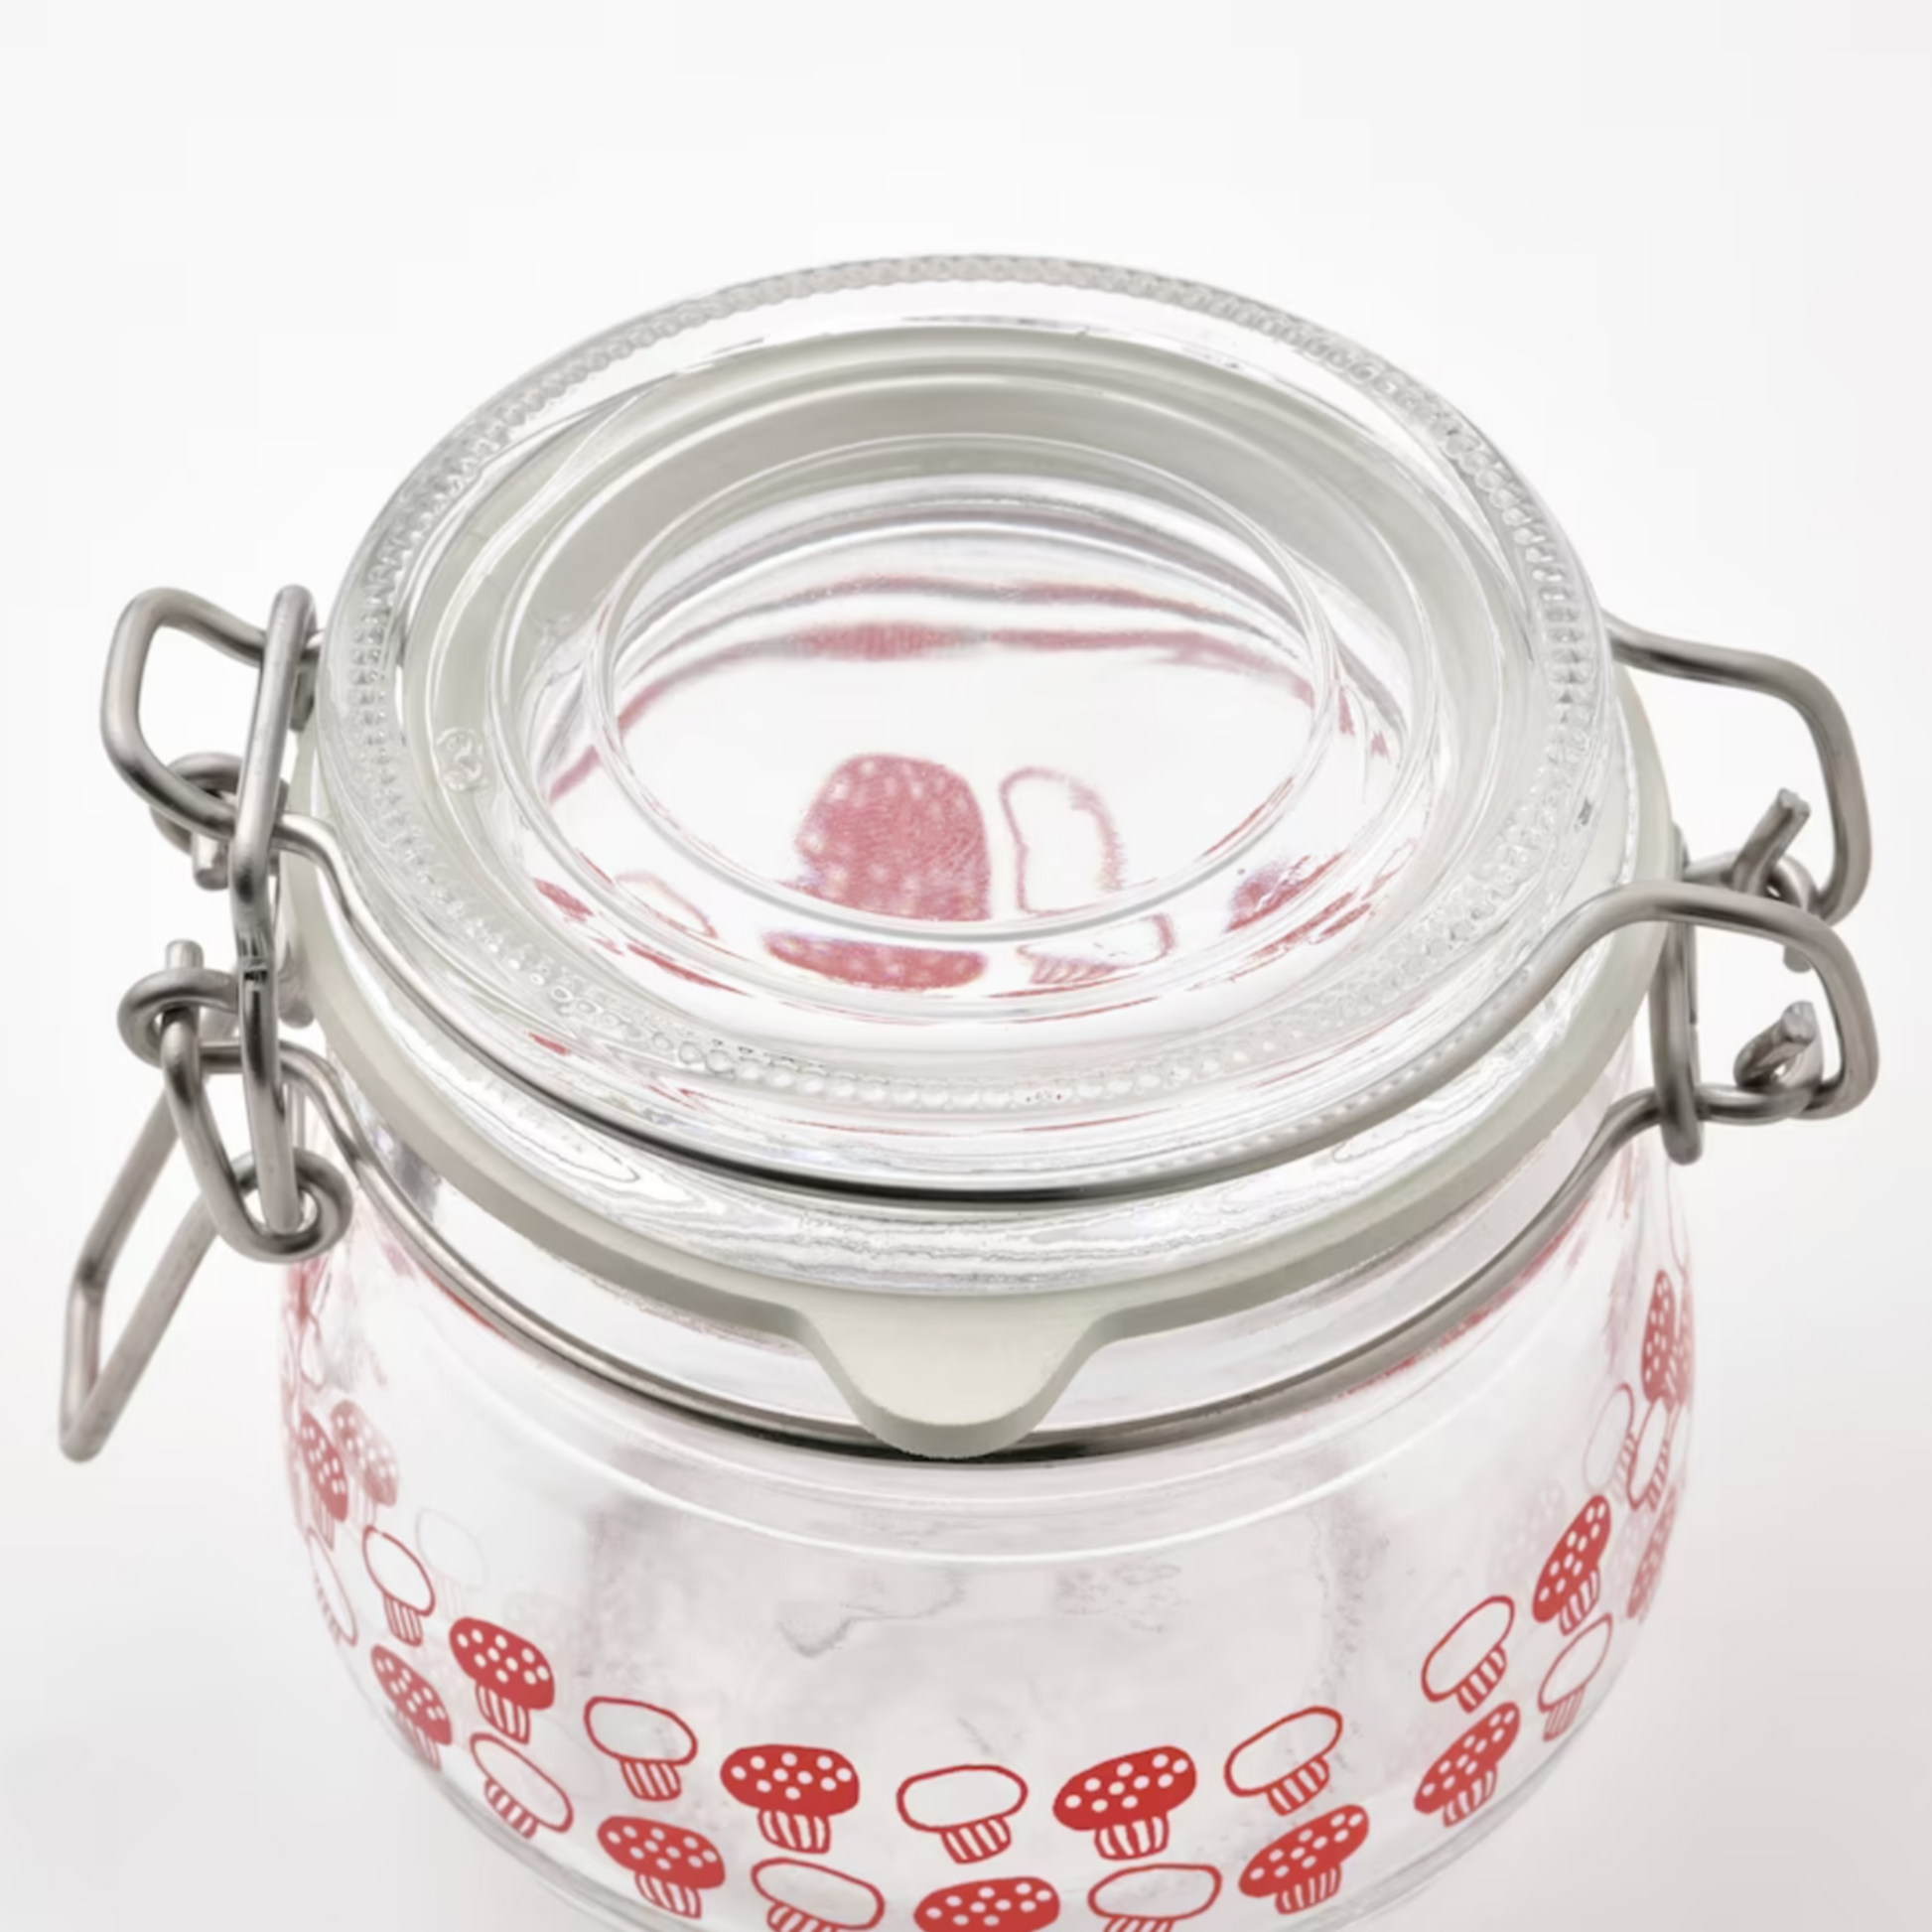 IKEA Korken jar with lid, patterned/bright red, 13 cl (8005198905631)